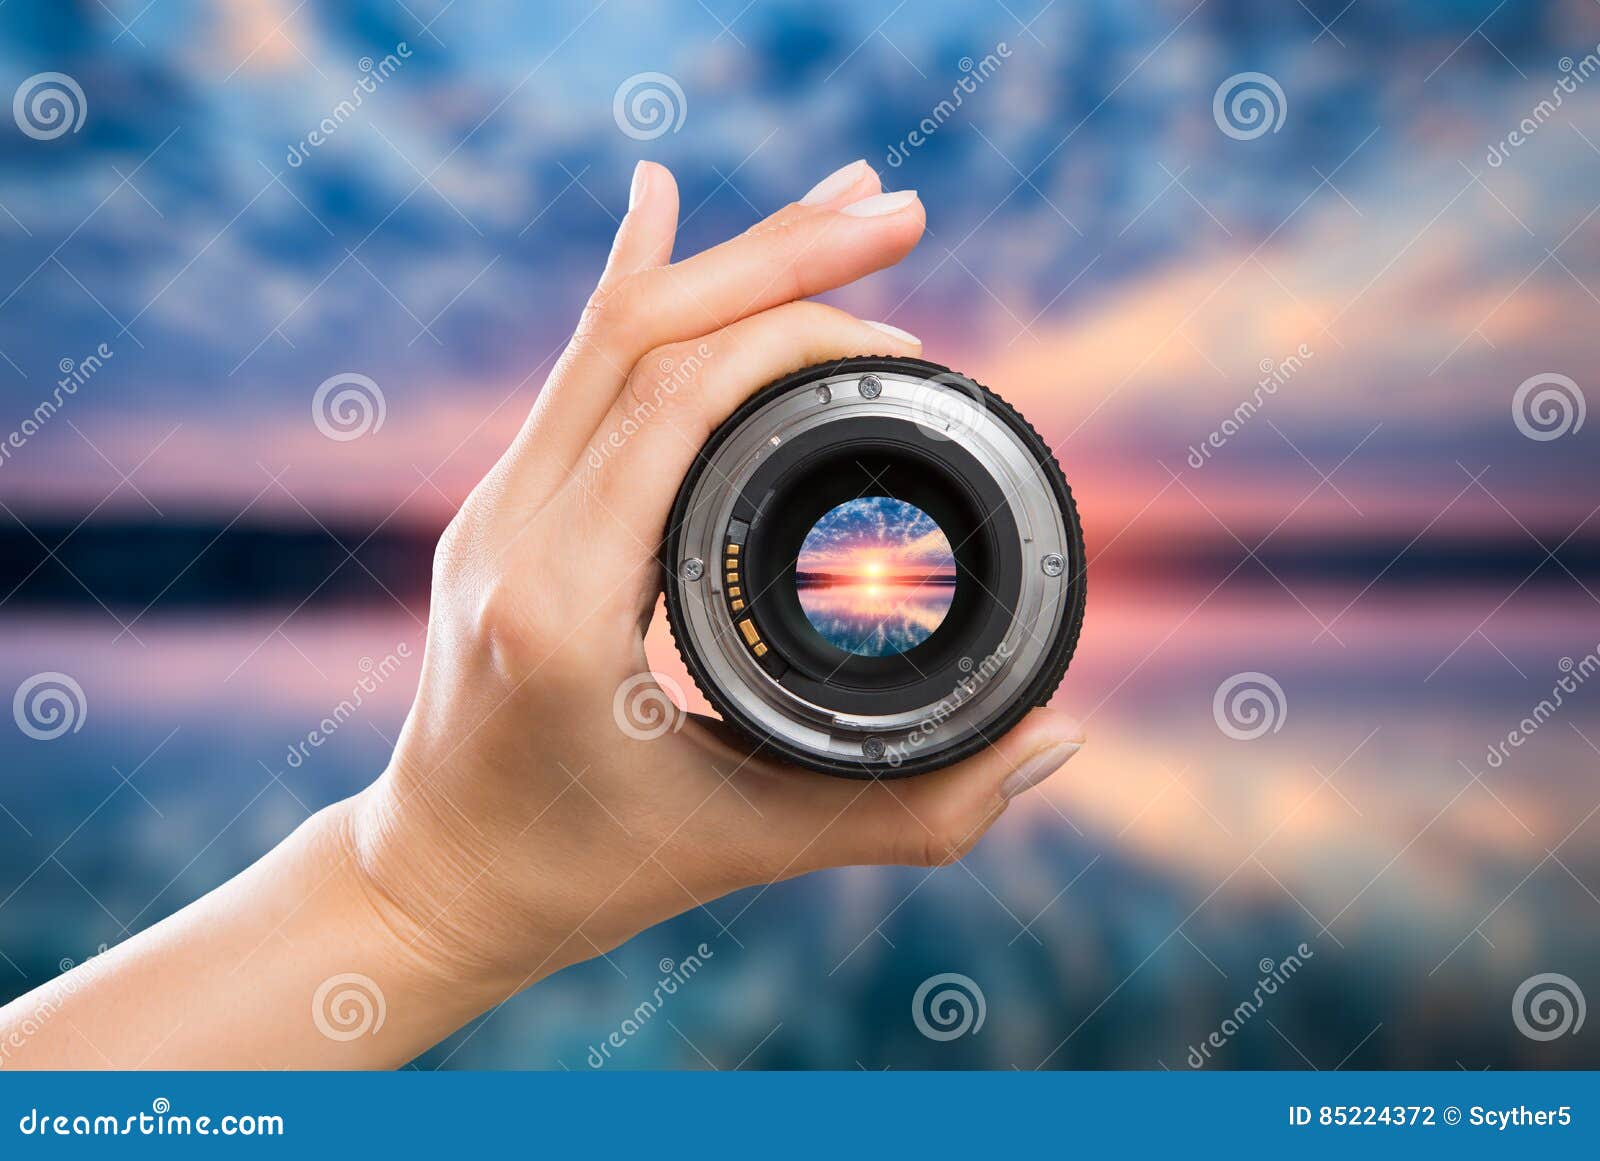 photography camera lens concept.